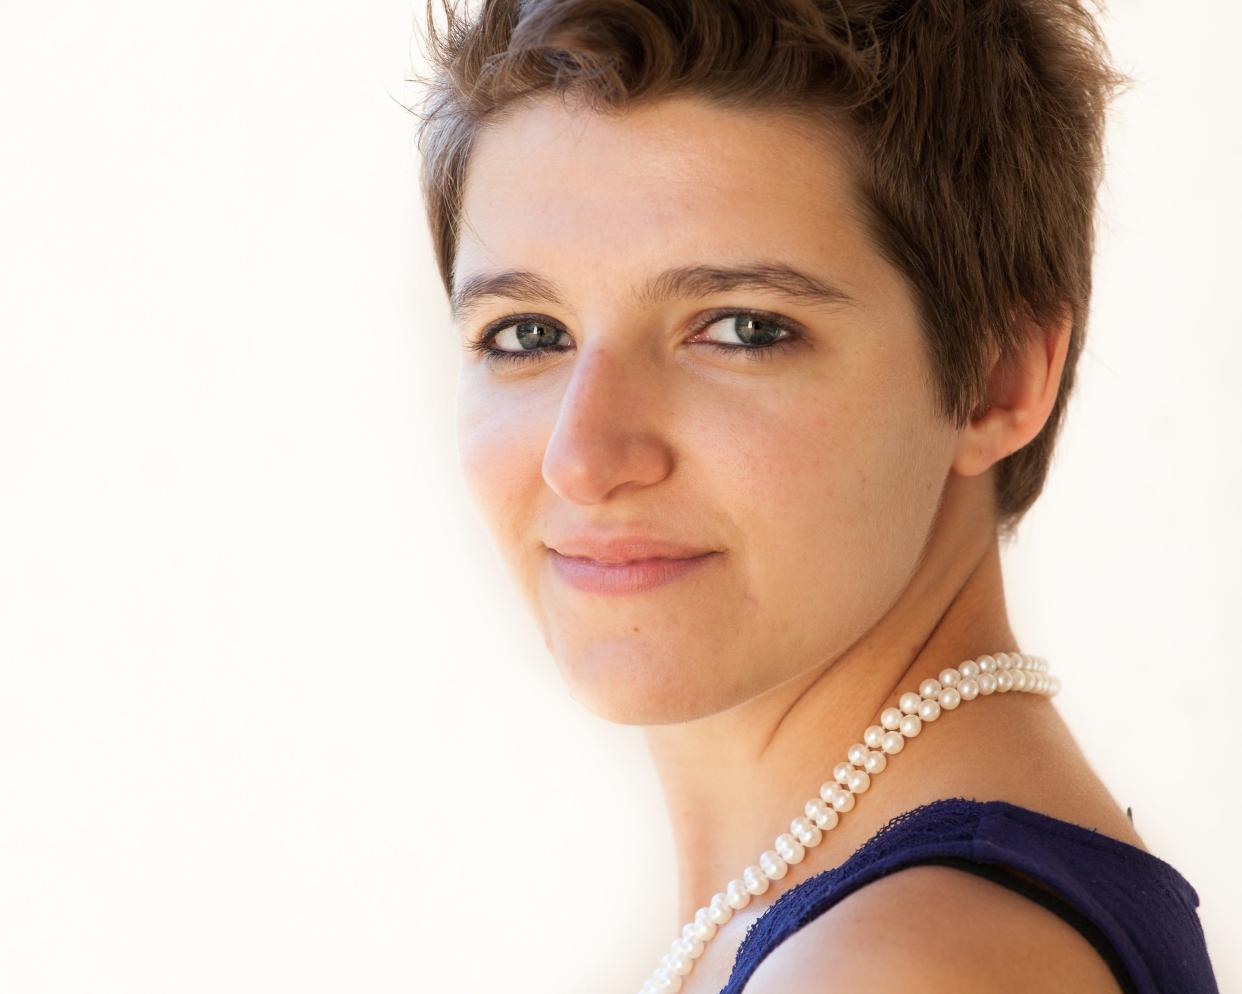 Kristin Idaszak is the author of the play "Tidy."